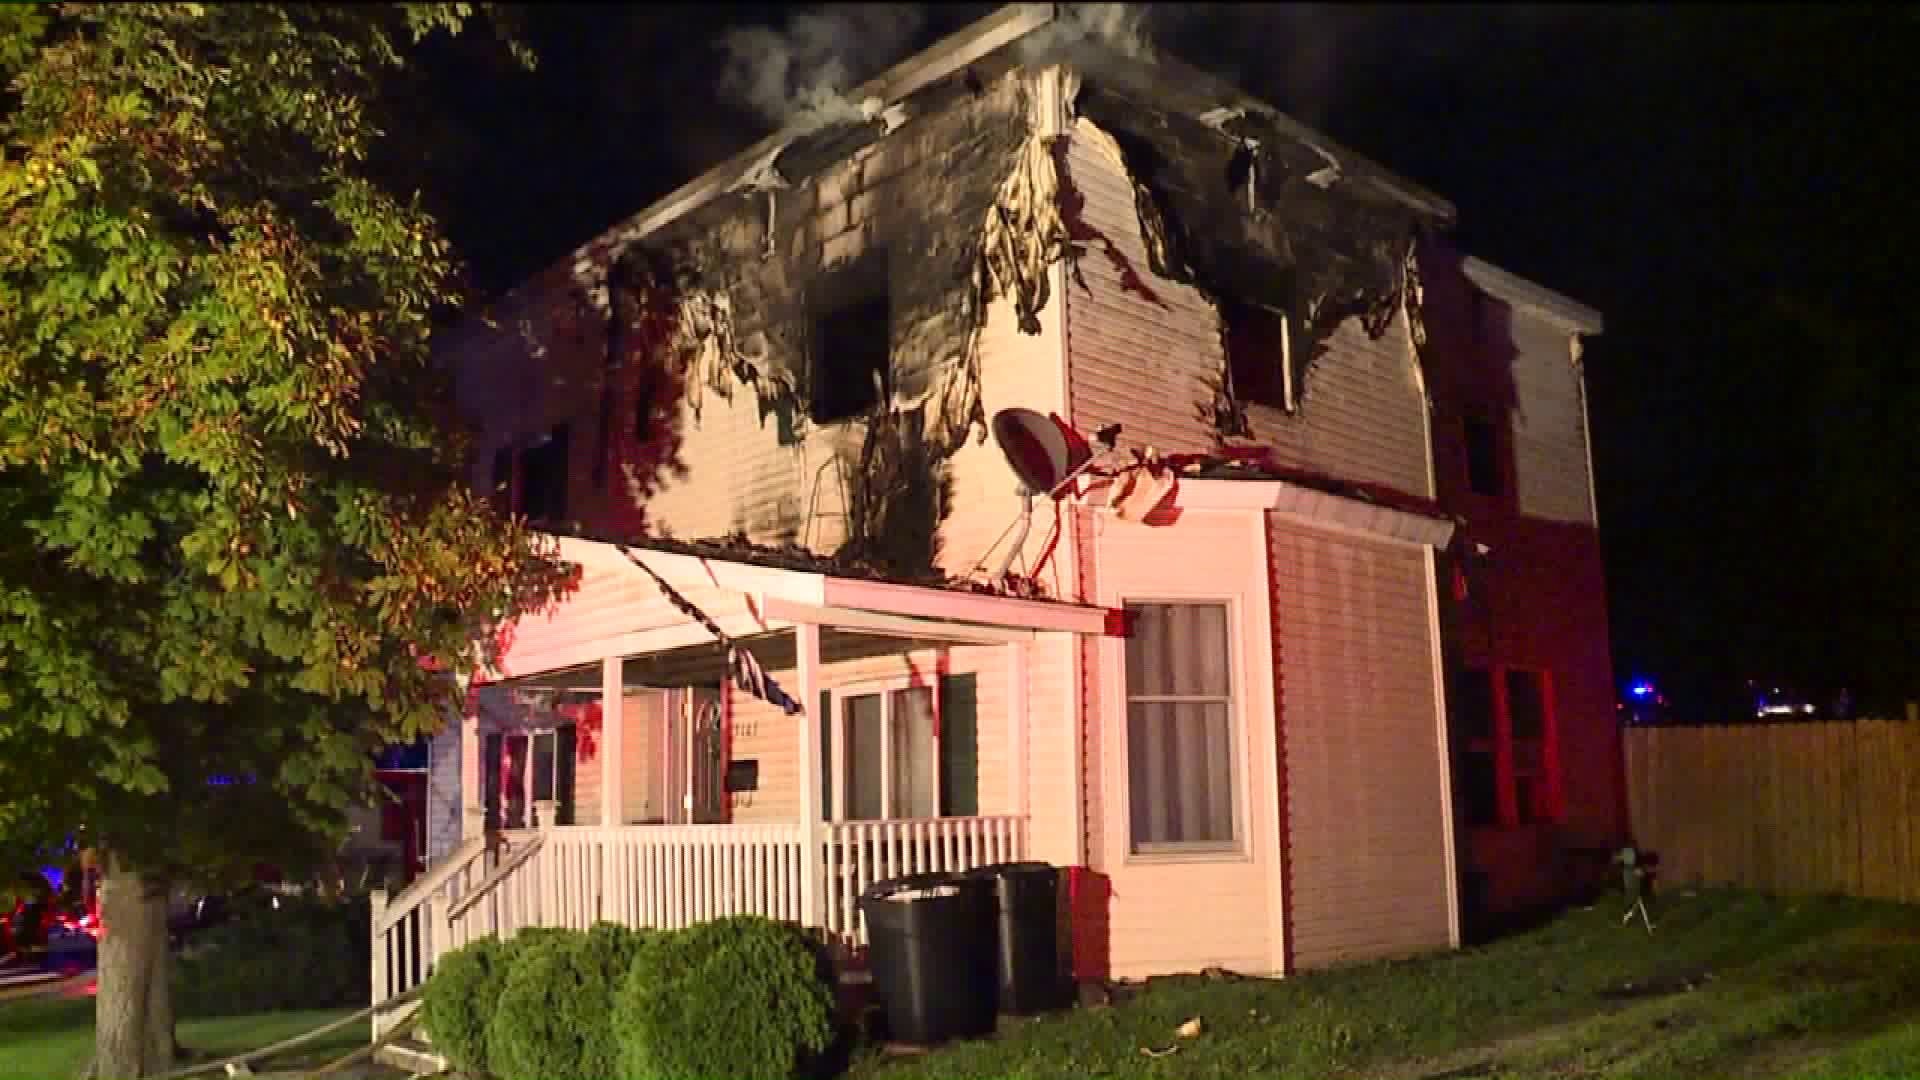 Fire Wrecks Home in Scranton